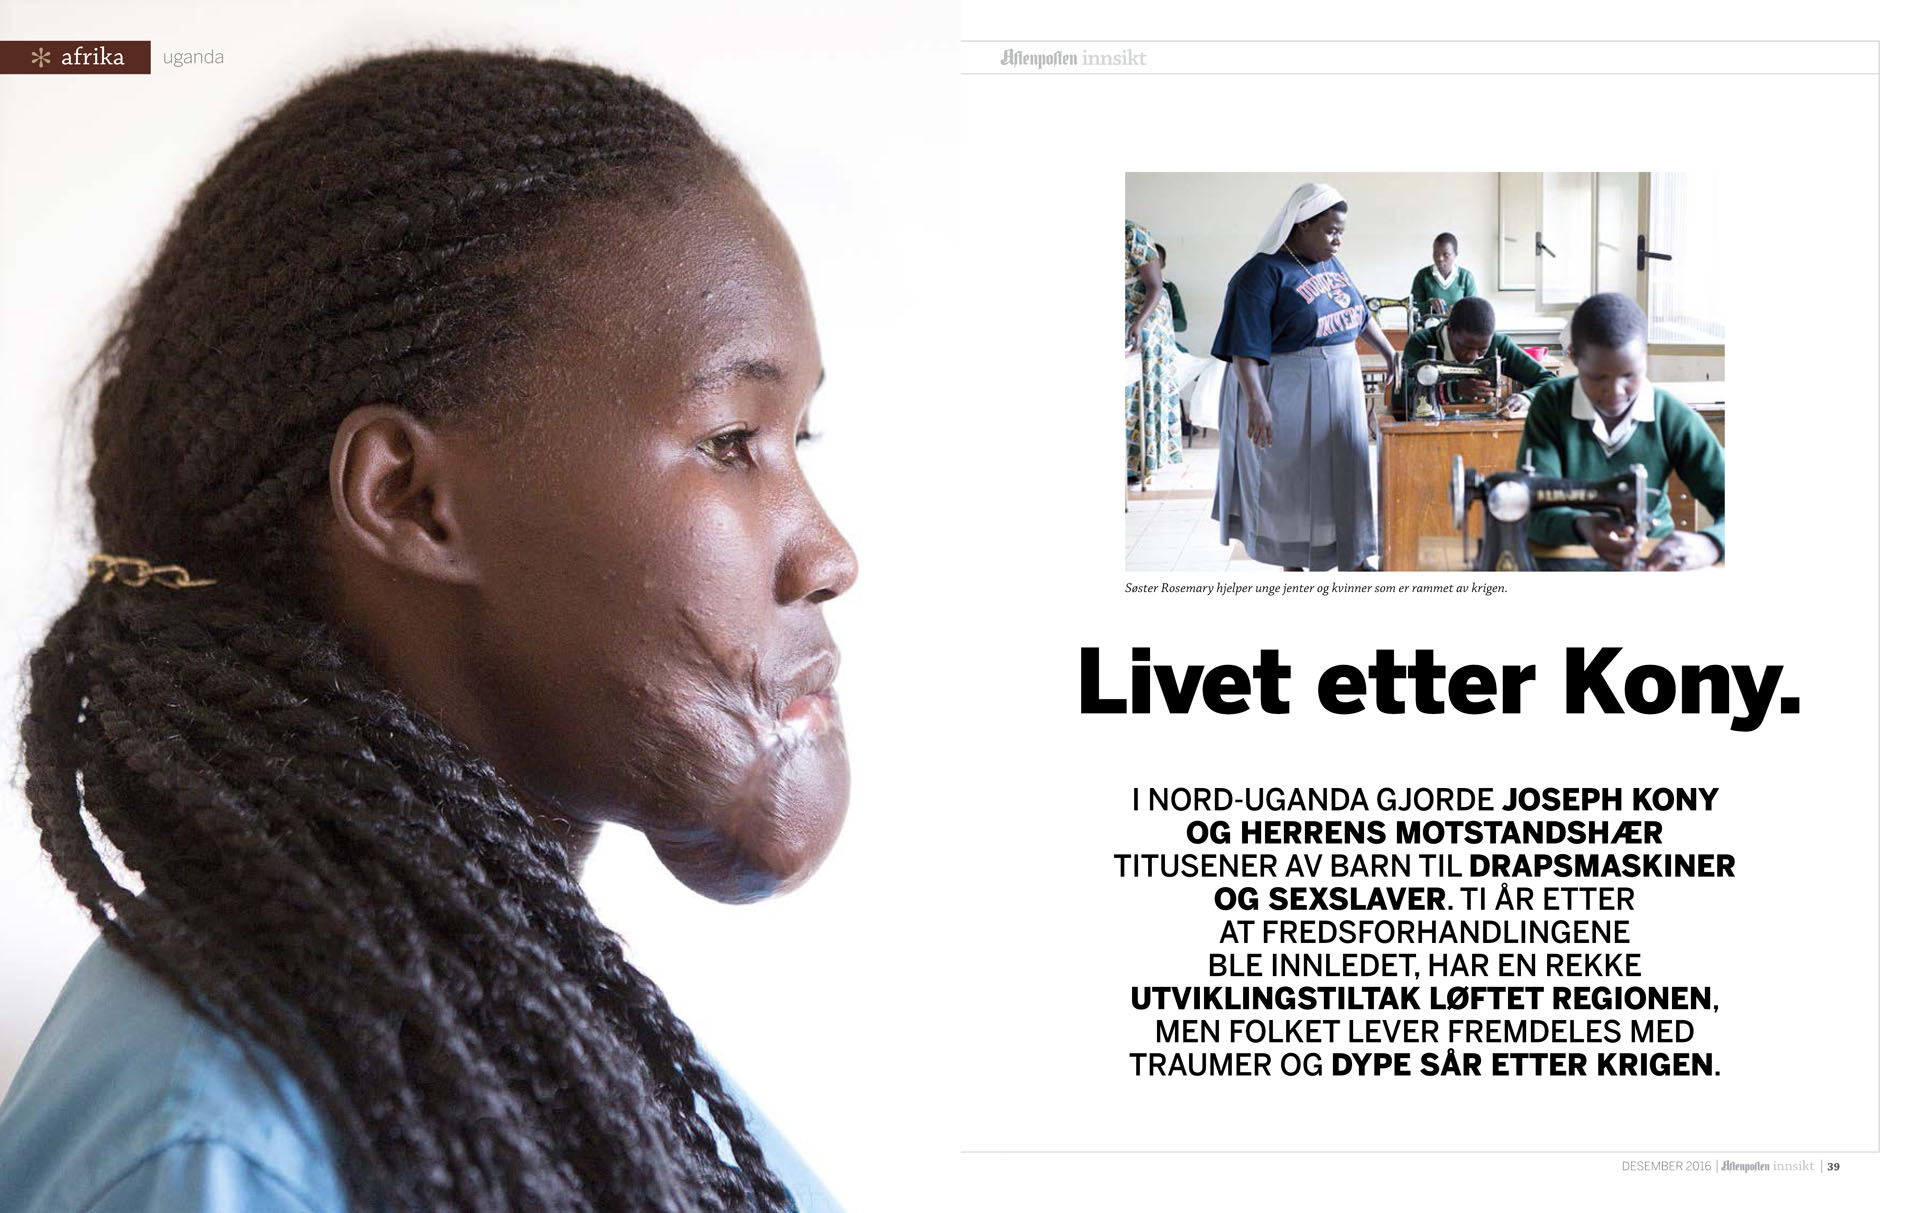 Story from Northern Uganda for Aftenposten Innsikt